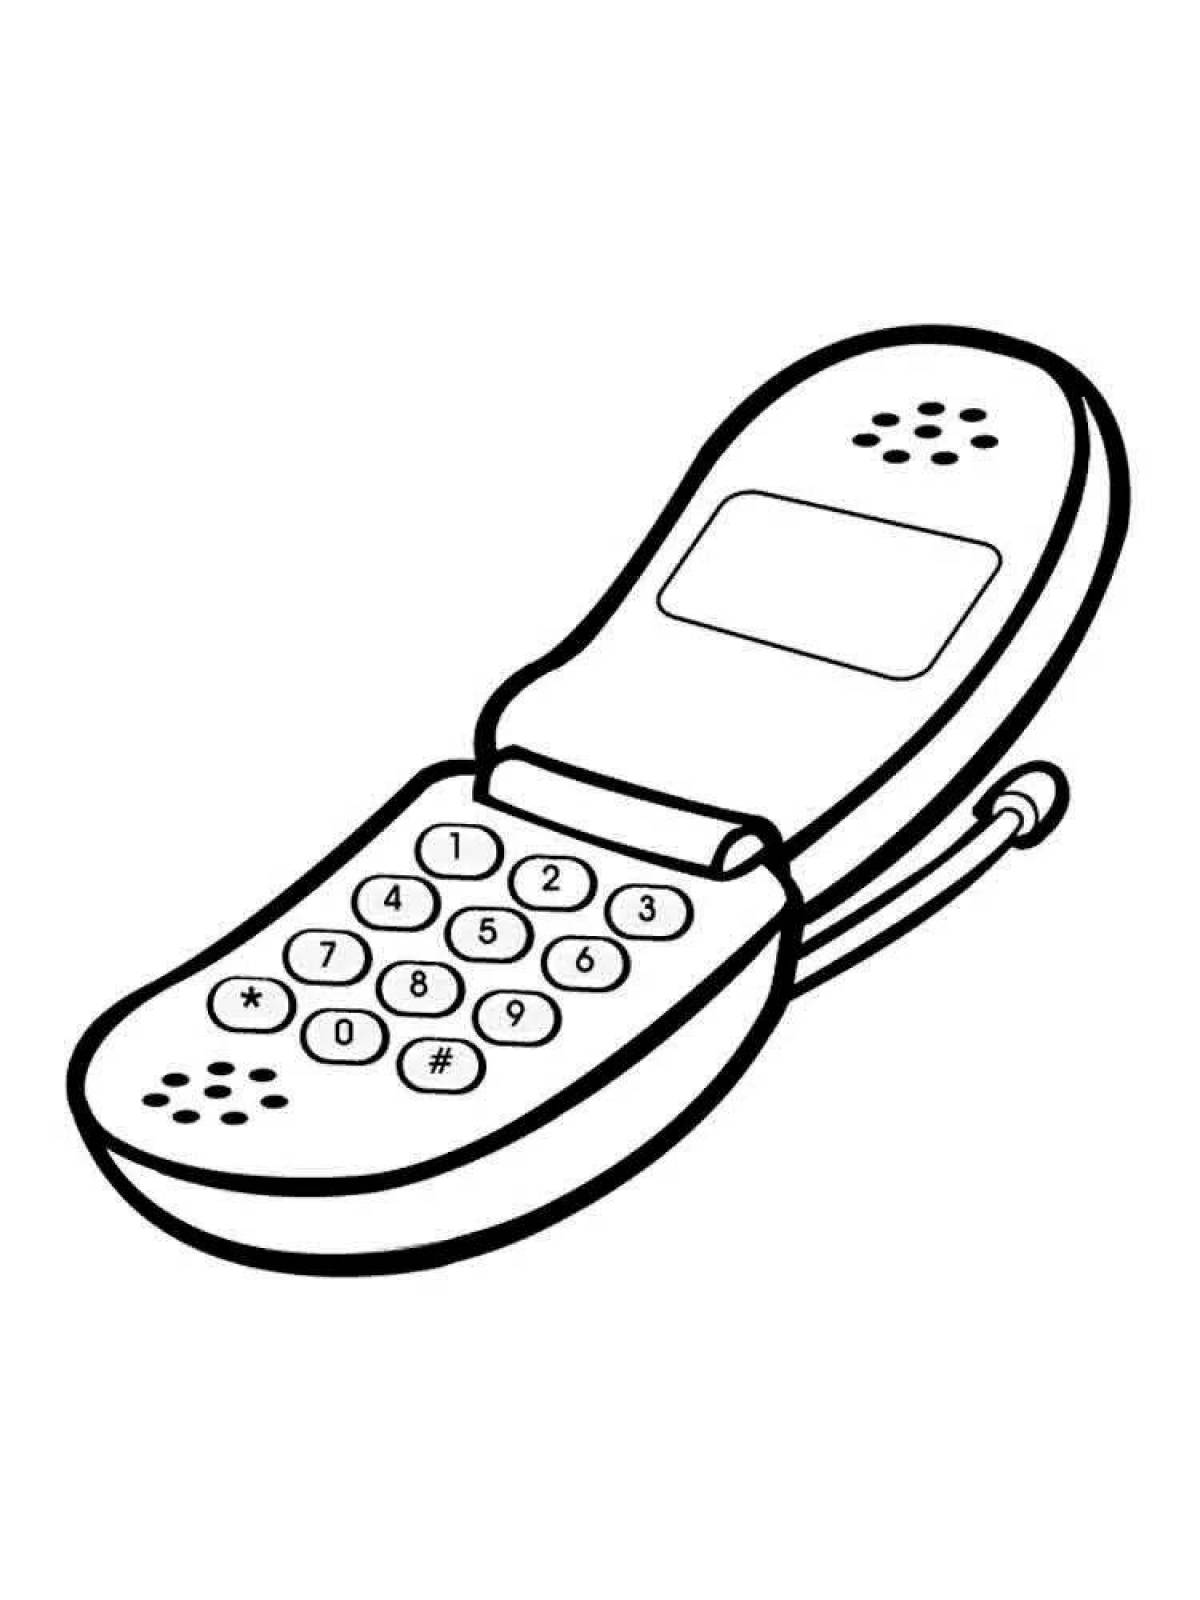 Cell phone for children #23